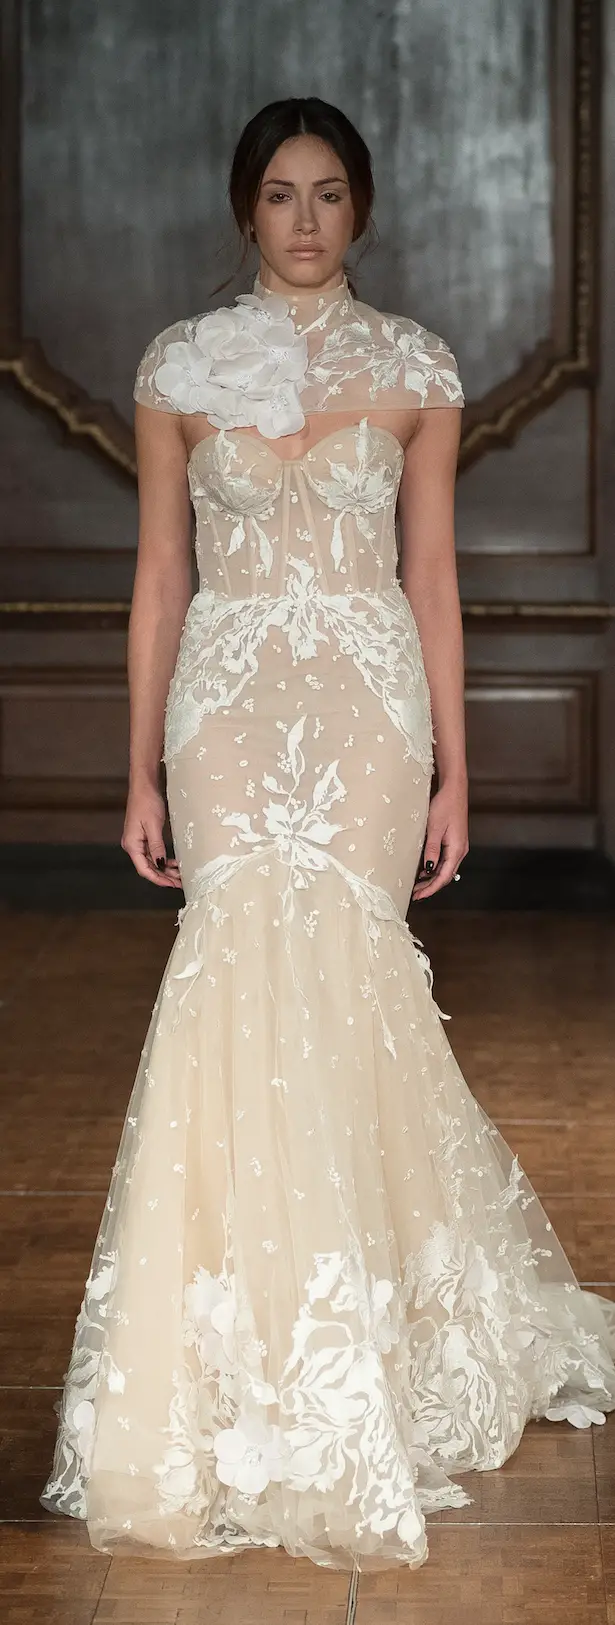 Wedding Dress - Idan Cohen 2017 Bridal Collection